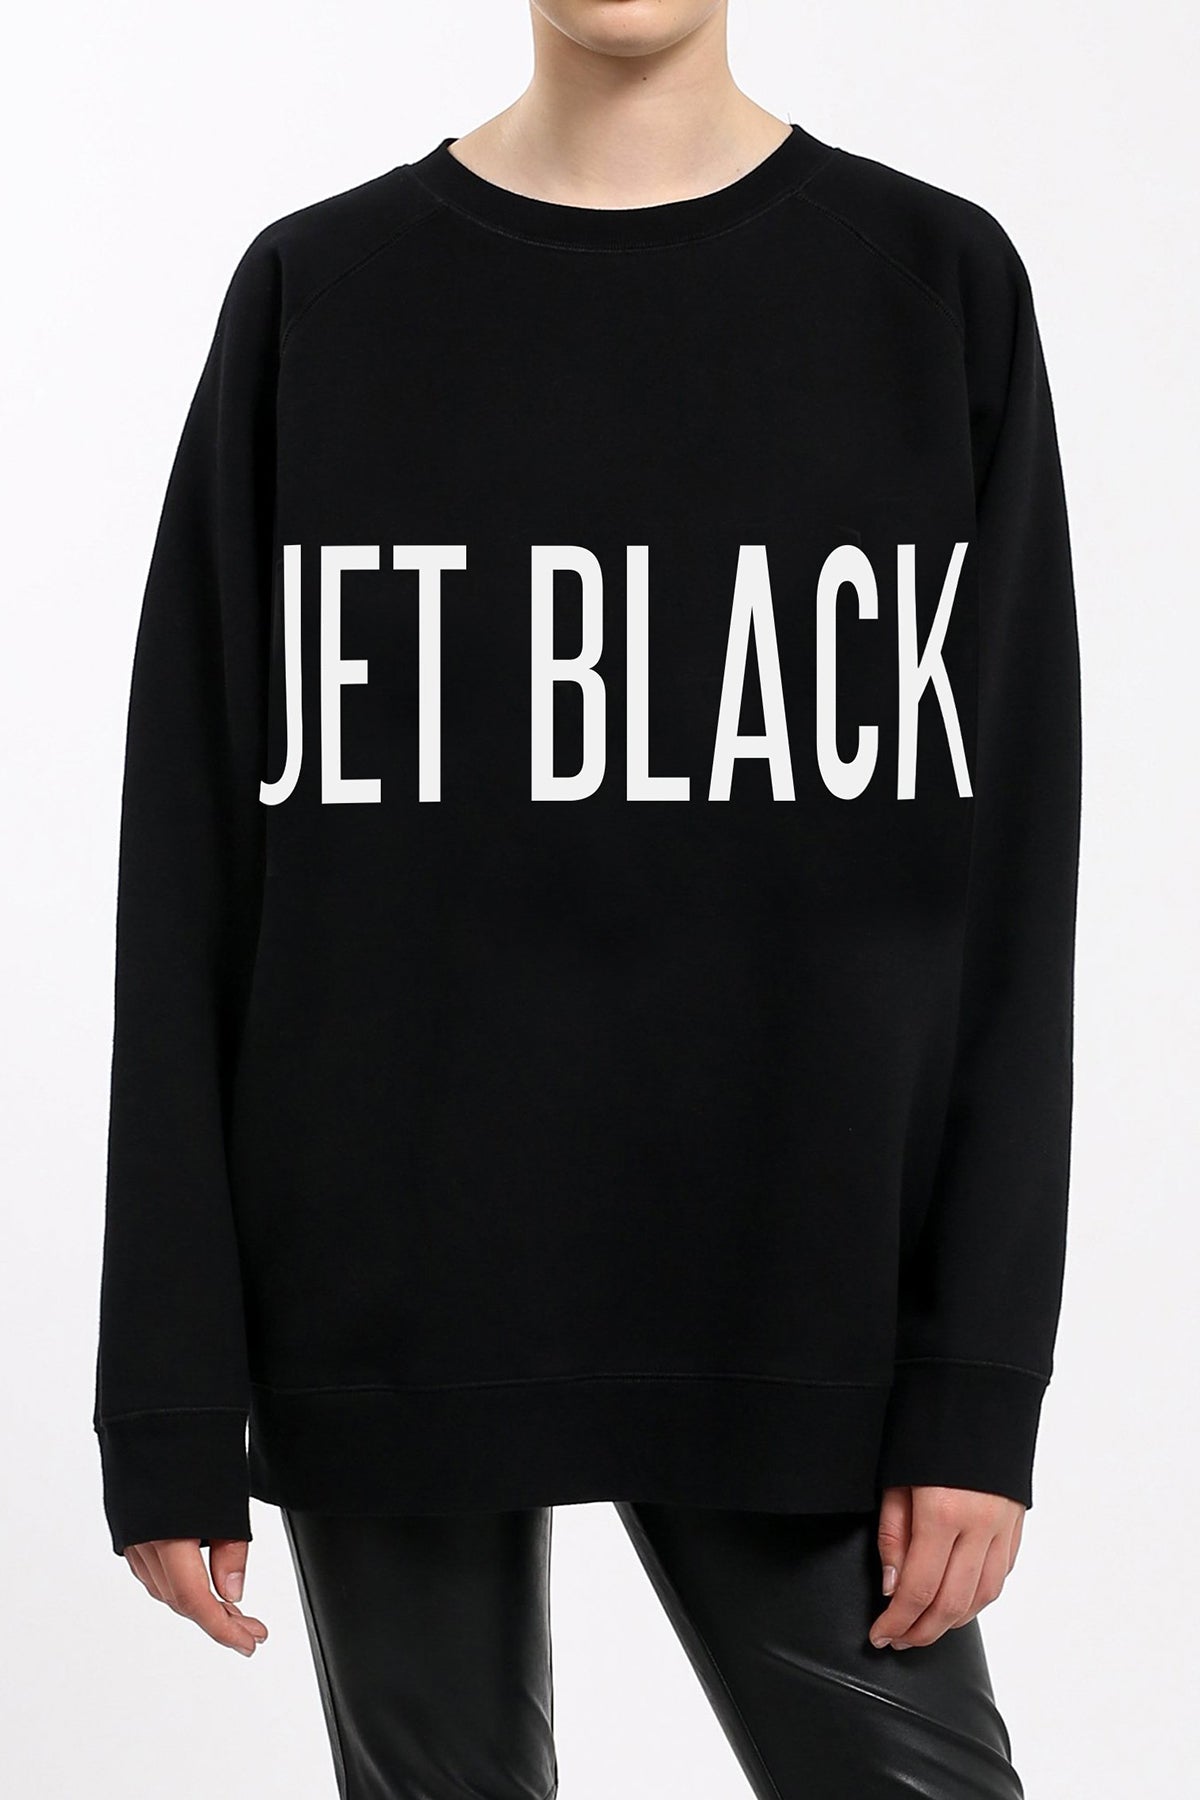 The "JET BLACK" Big Sister Crew Neck Sweatshirt | Black